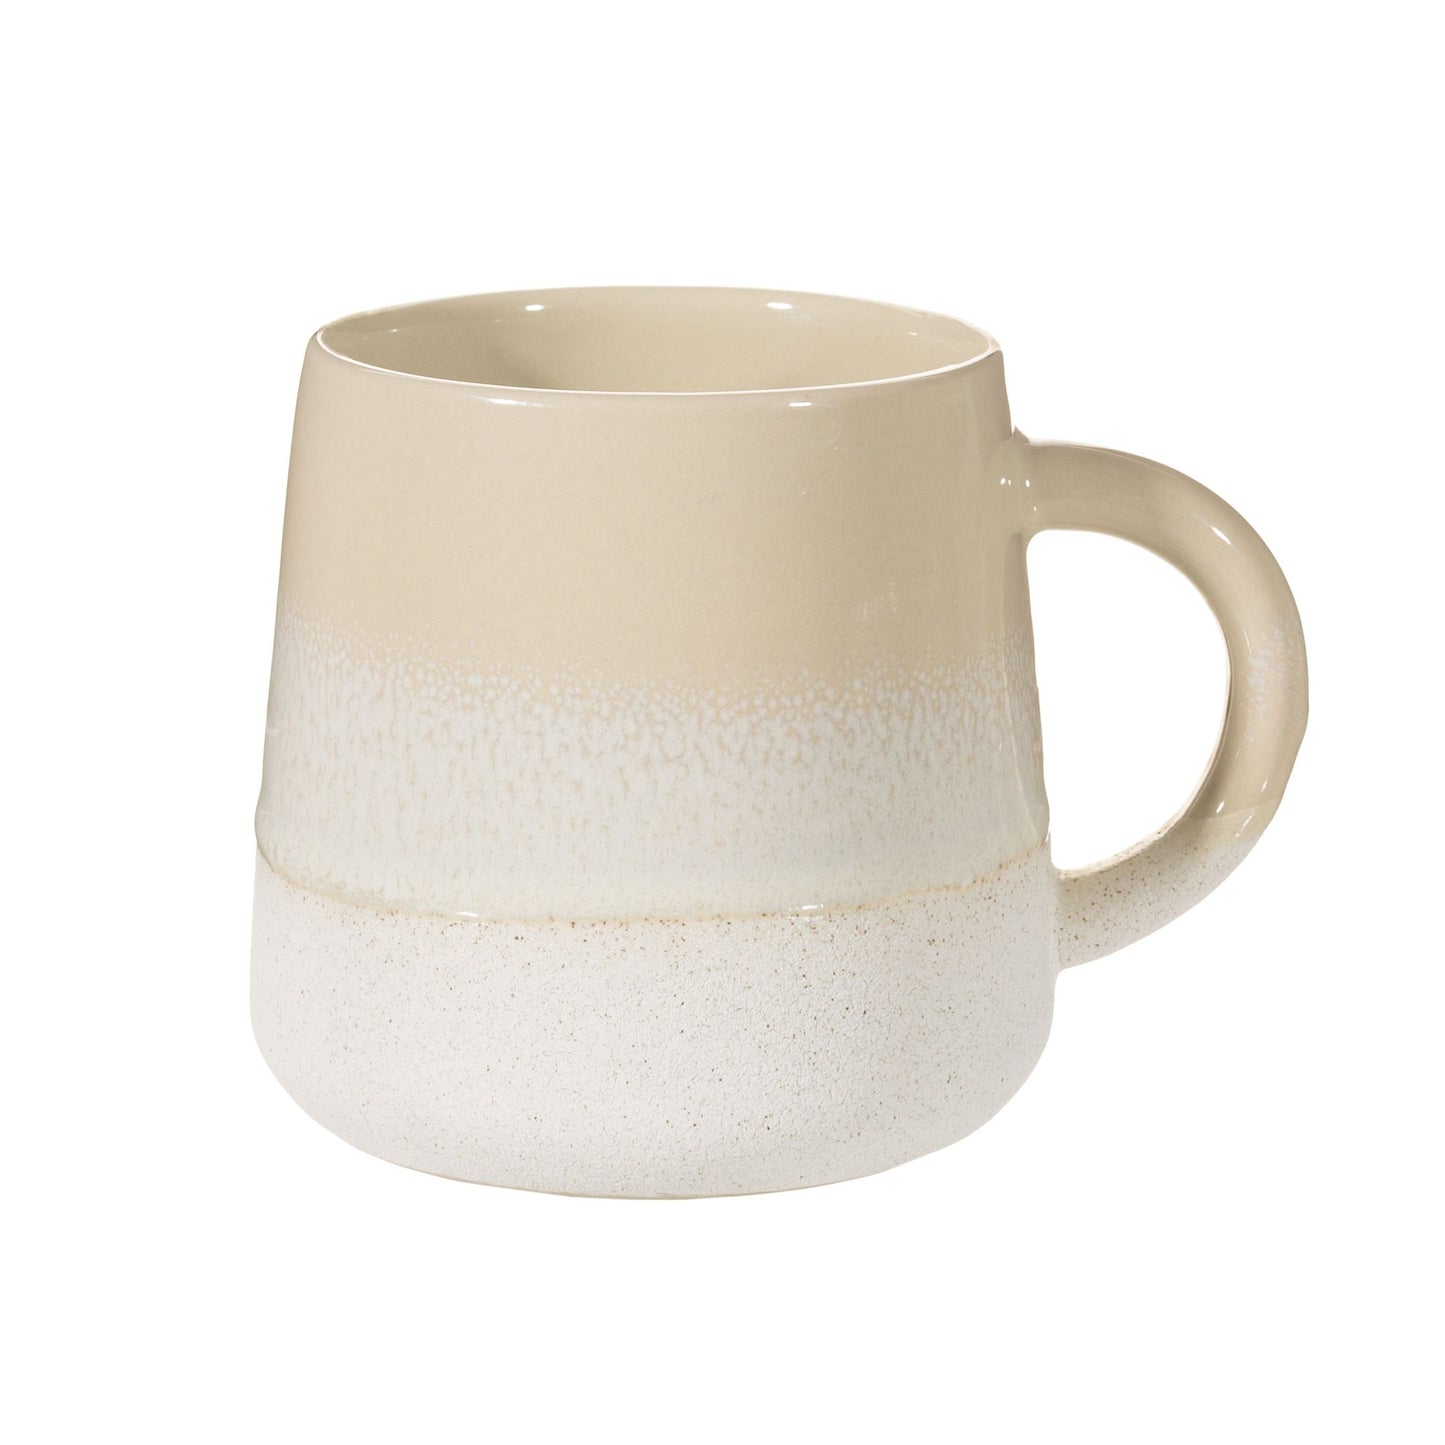 Mojave Oatmeal Stoneware Mug